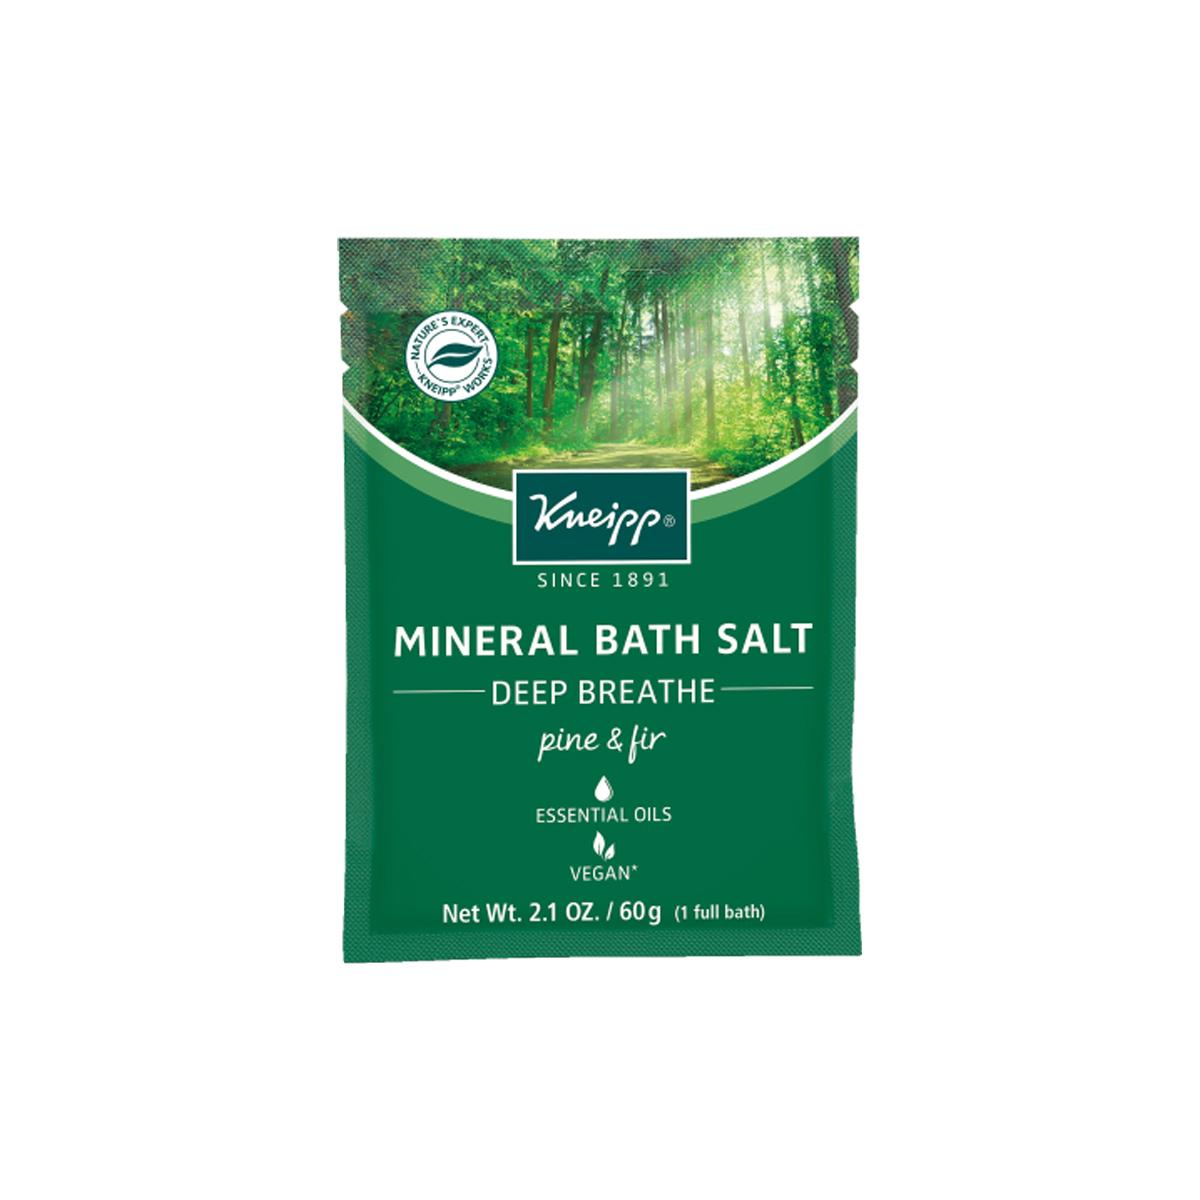 Primary image of Bath Salt- Deep Breathe